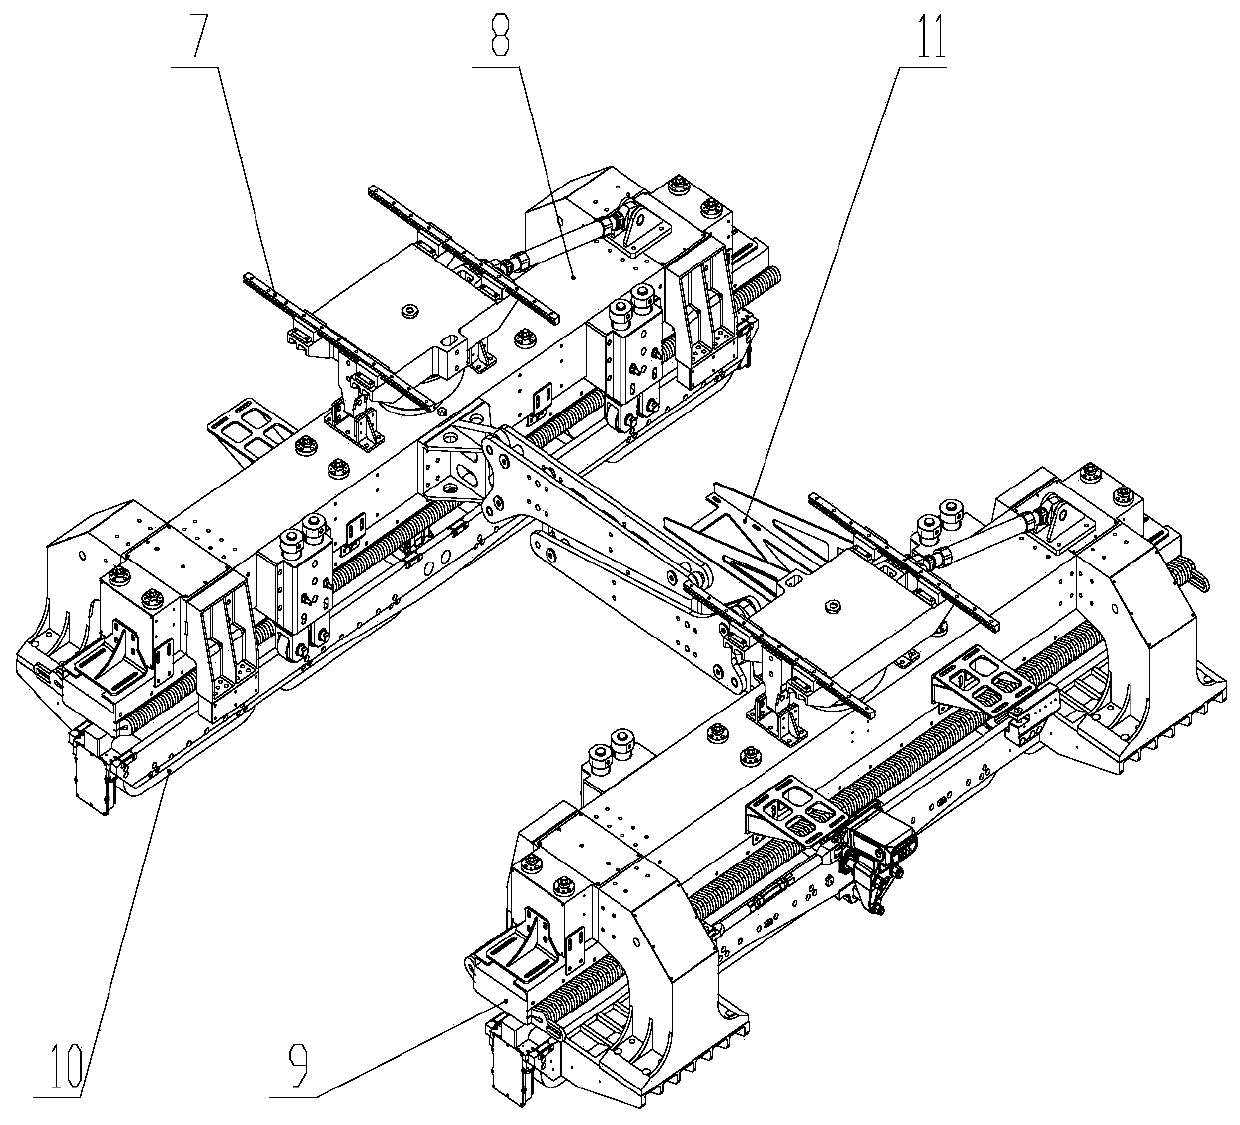 A six-suspension module medium-speed maglev vehicle running mechanism